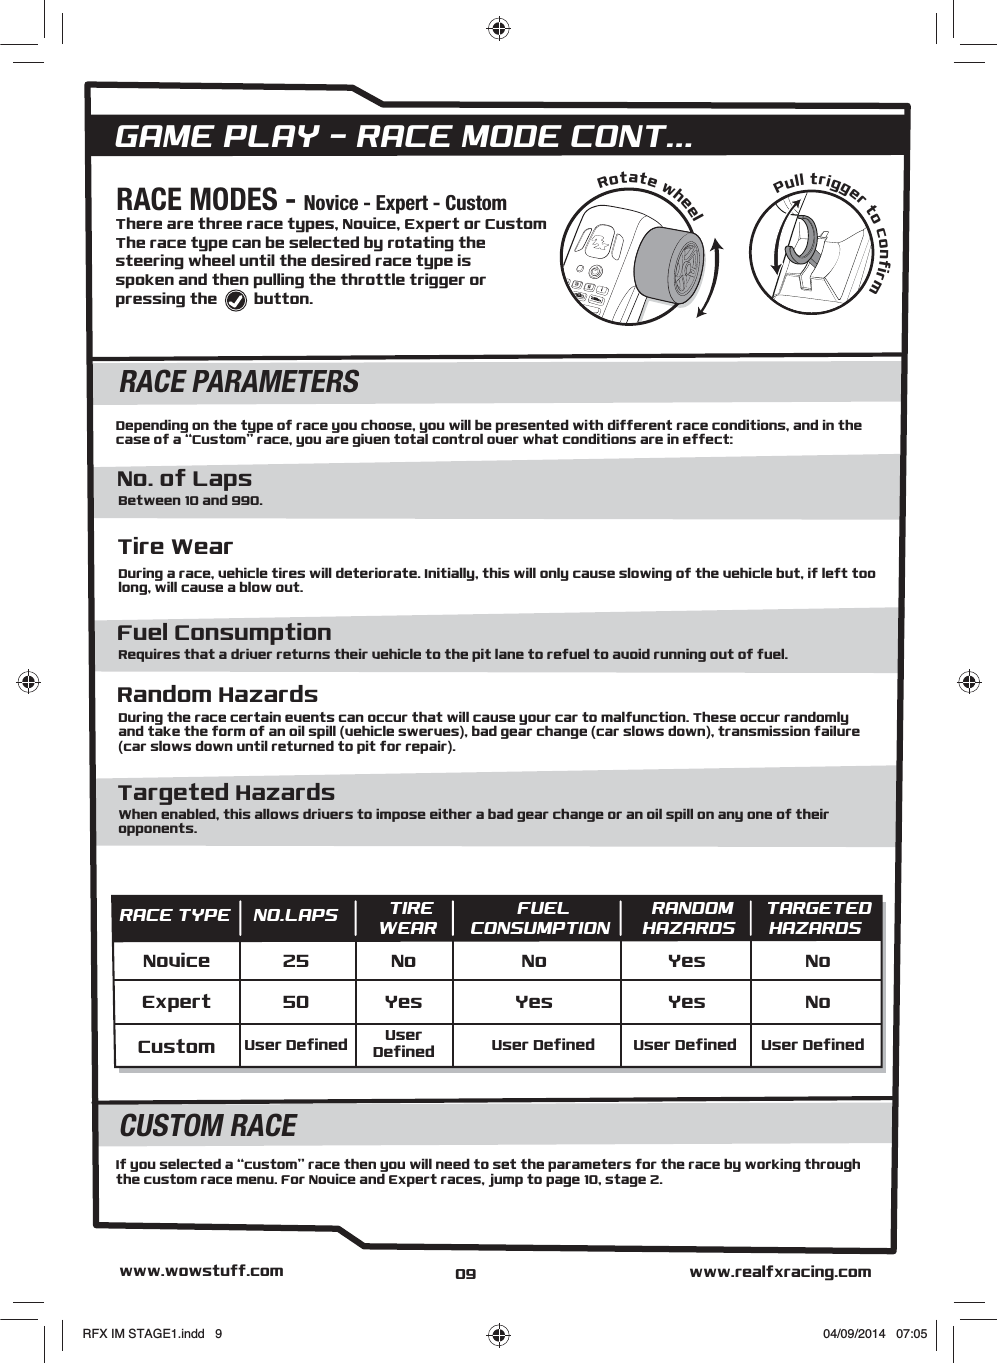 Download Power Wheel Duane Racer Manual